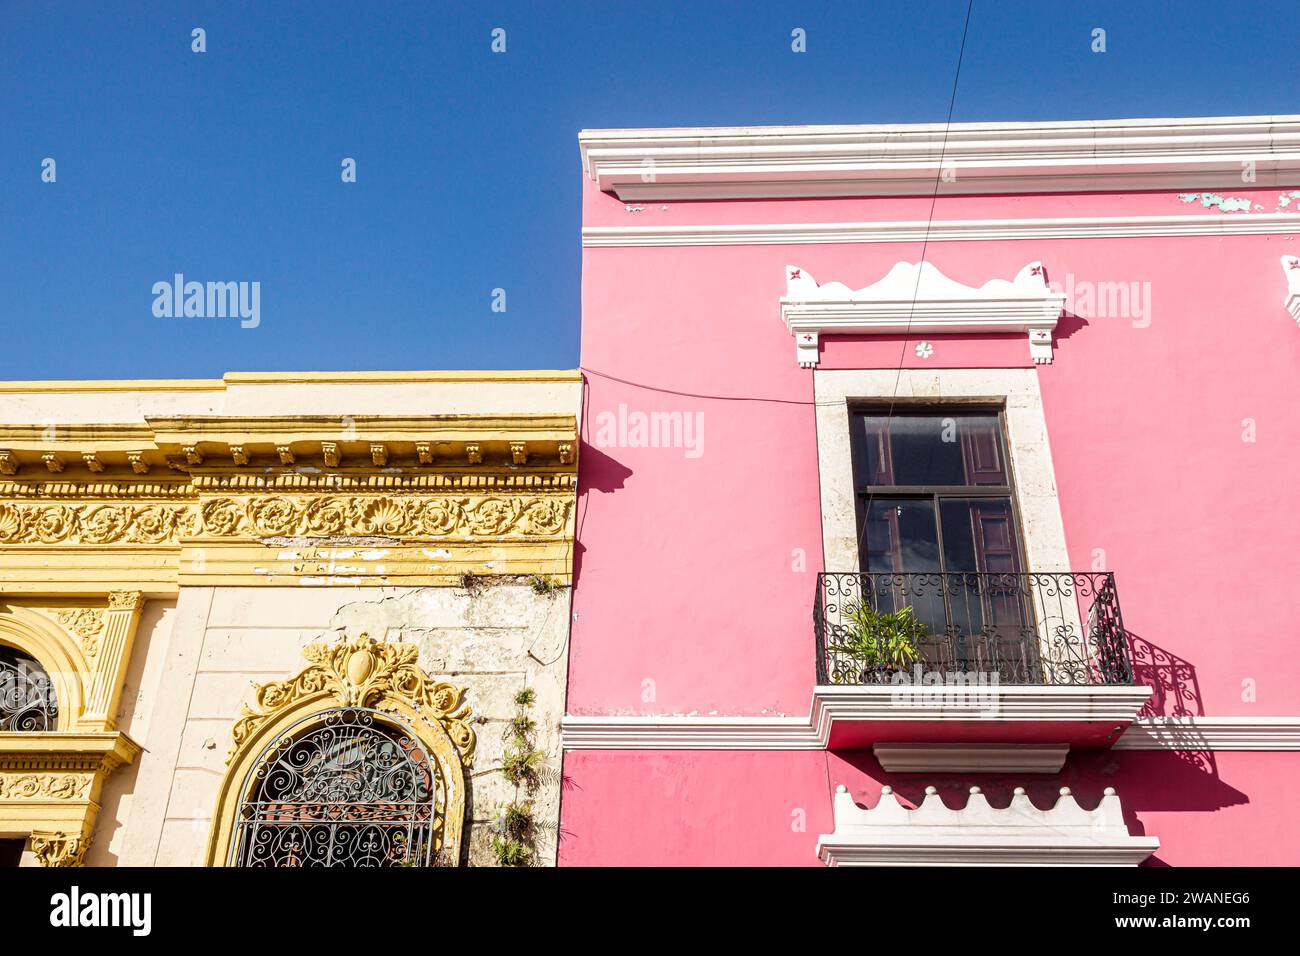 Merida Mexico,centro historico central historic district,pink Hotel Gran Centenario,yellow Biblioteca Central Estatal Manuel Cepeda Peraza library,out Stock Photo